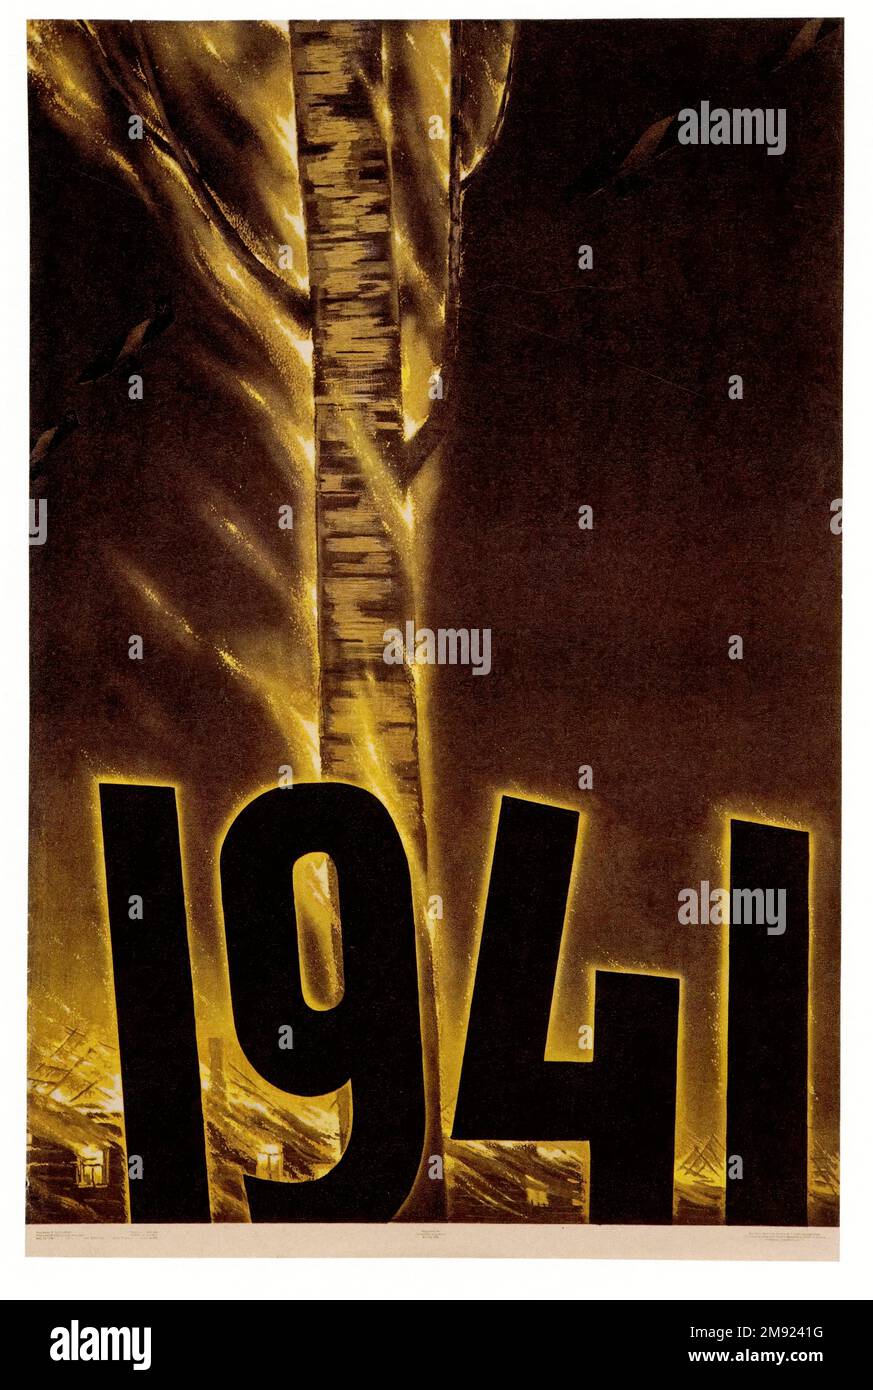 nazi germany invades the ussr   - Vintage USSR soviet propaganda poster Stock Photo